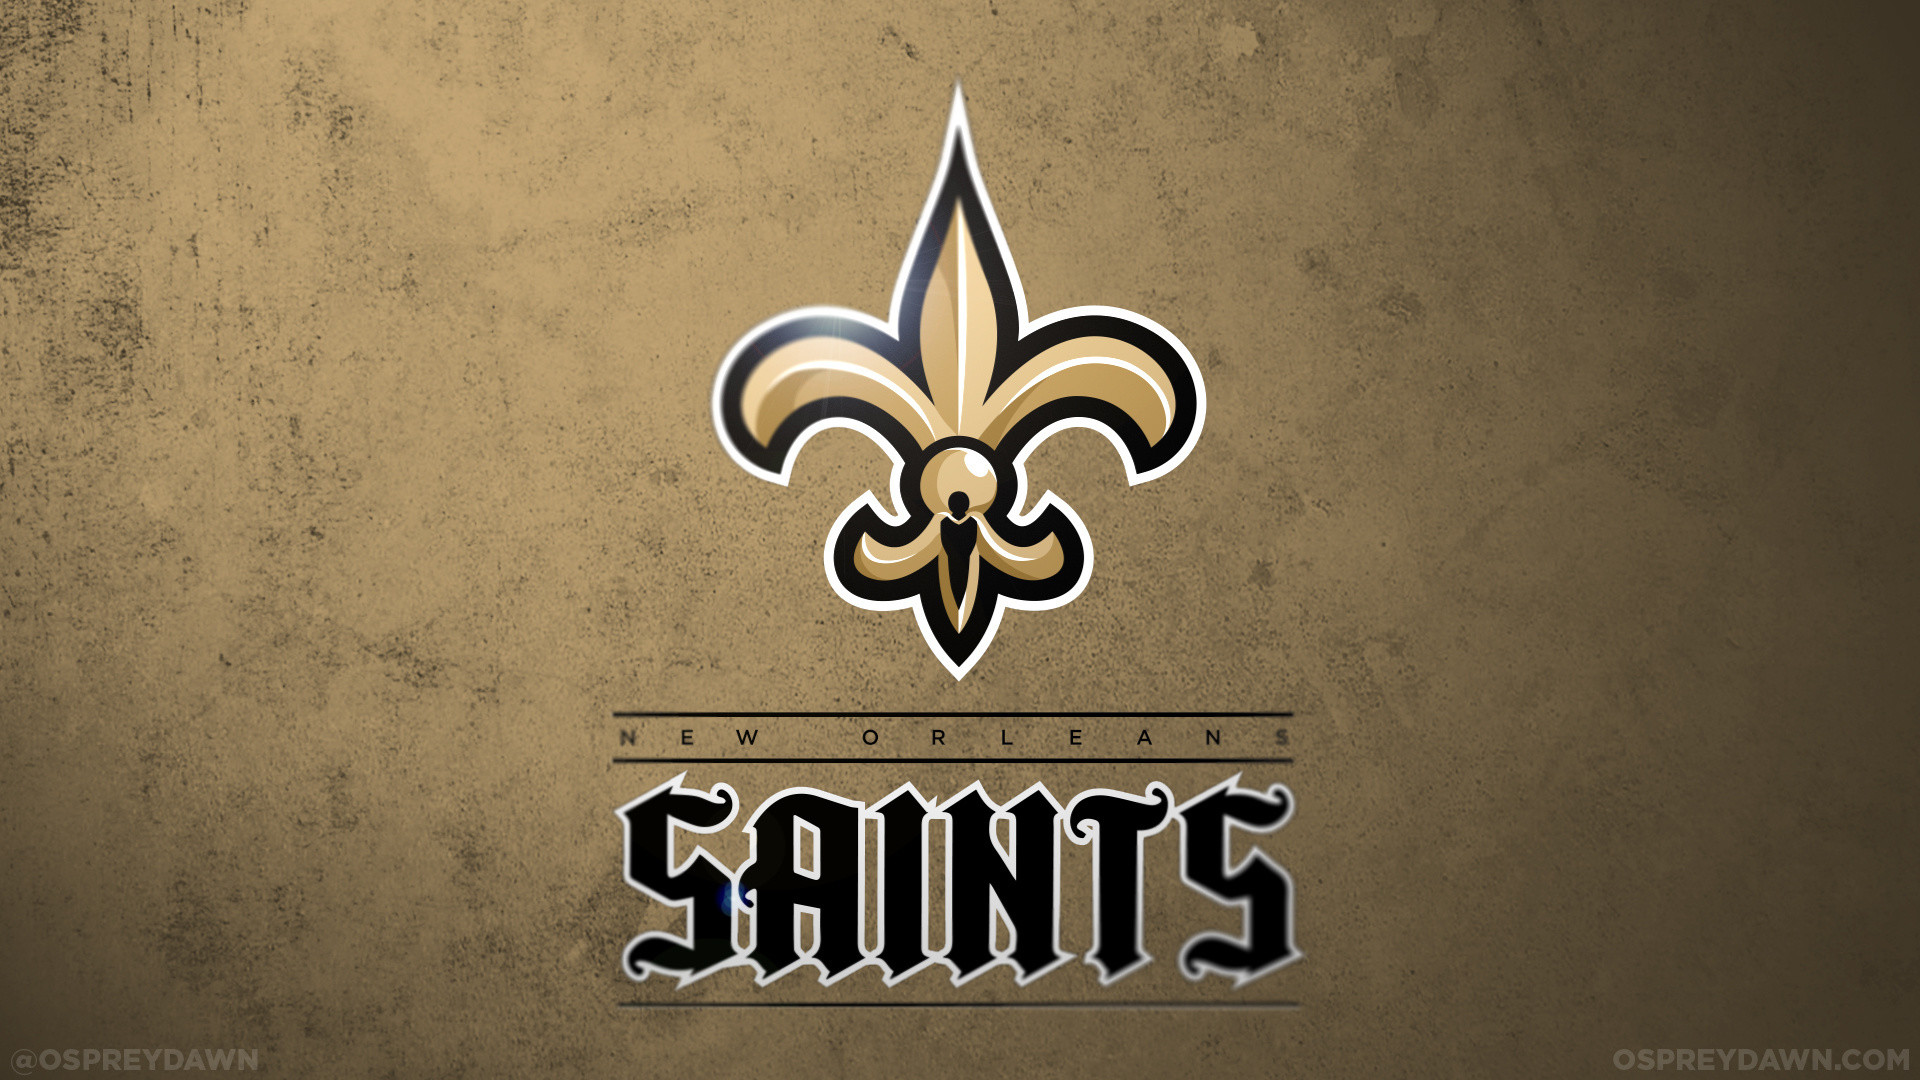 1920x1080 New Orleans Saints Nfl, Nfl, American Football, New Orleans Saints, New  Orleans